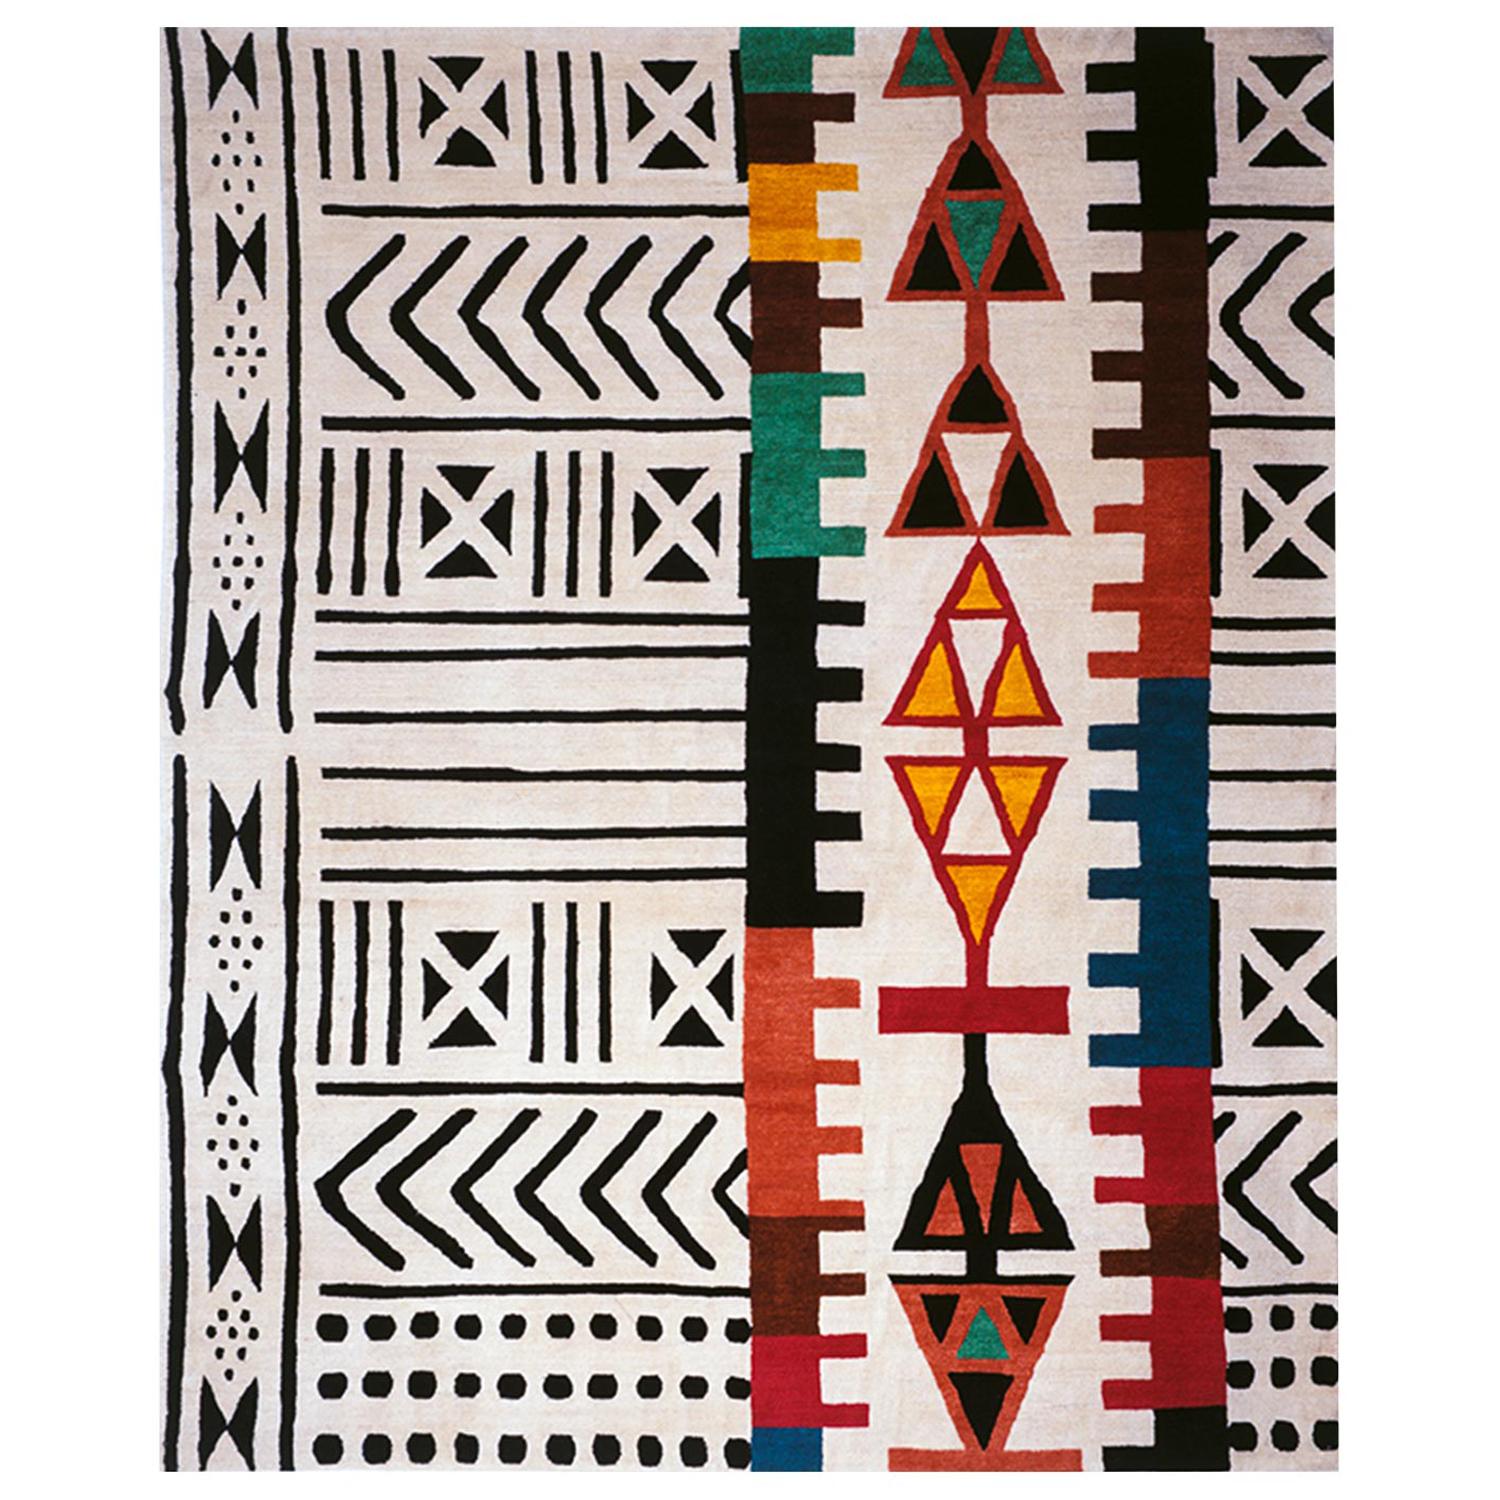 Ground Line 3 Woollen Carpet by Nanda Vigo for Post Design Collection/Memphis